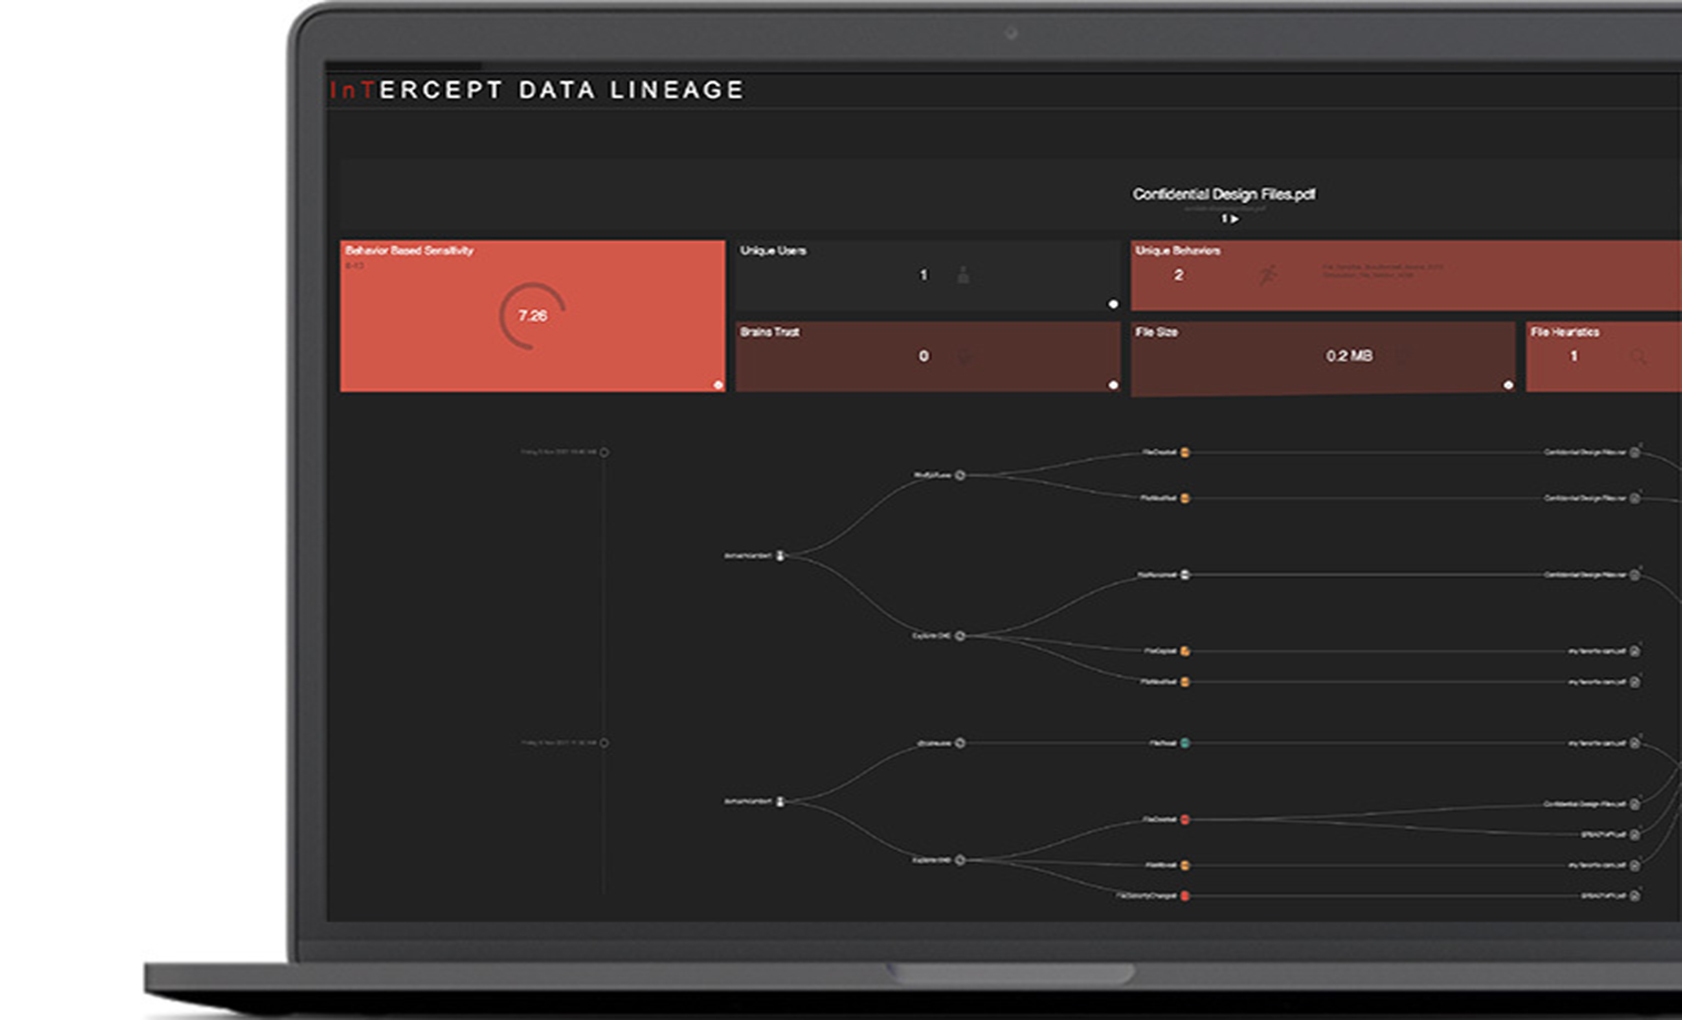 DTEx InTERCEPT Data Lineage dashboard Insider Risk Management 2